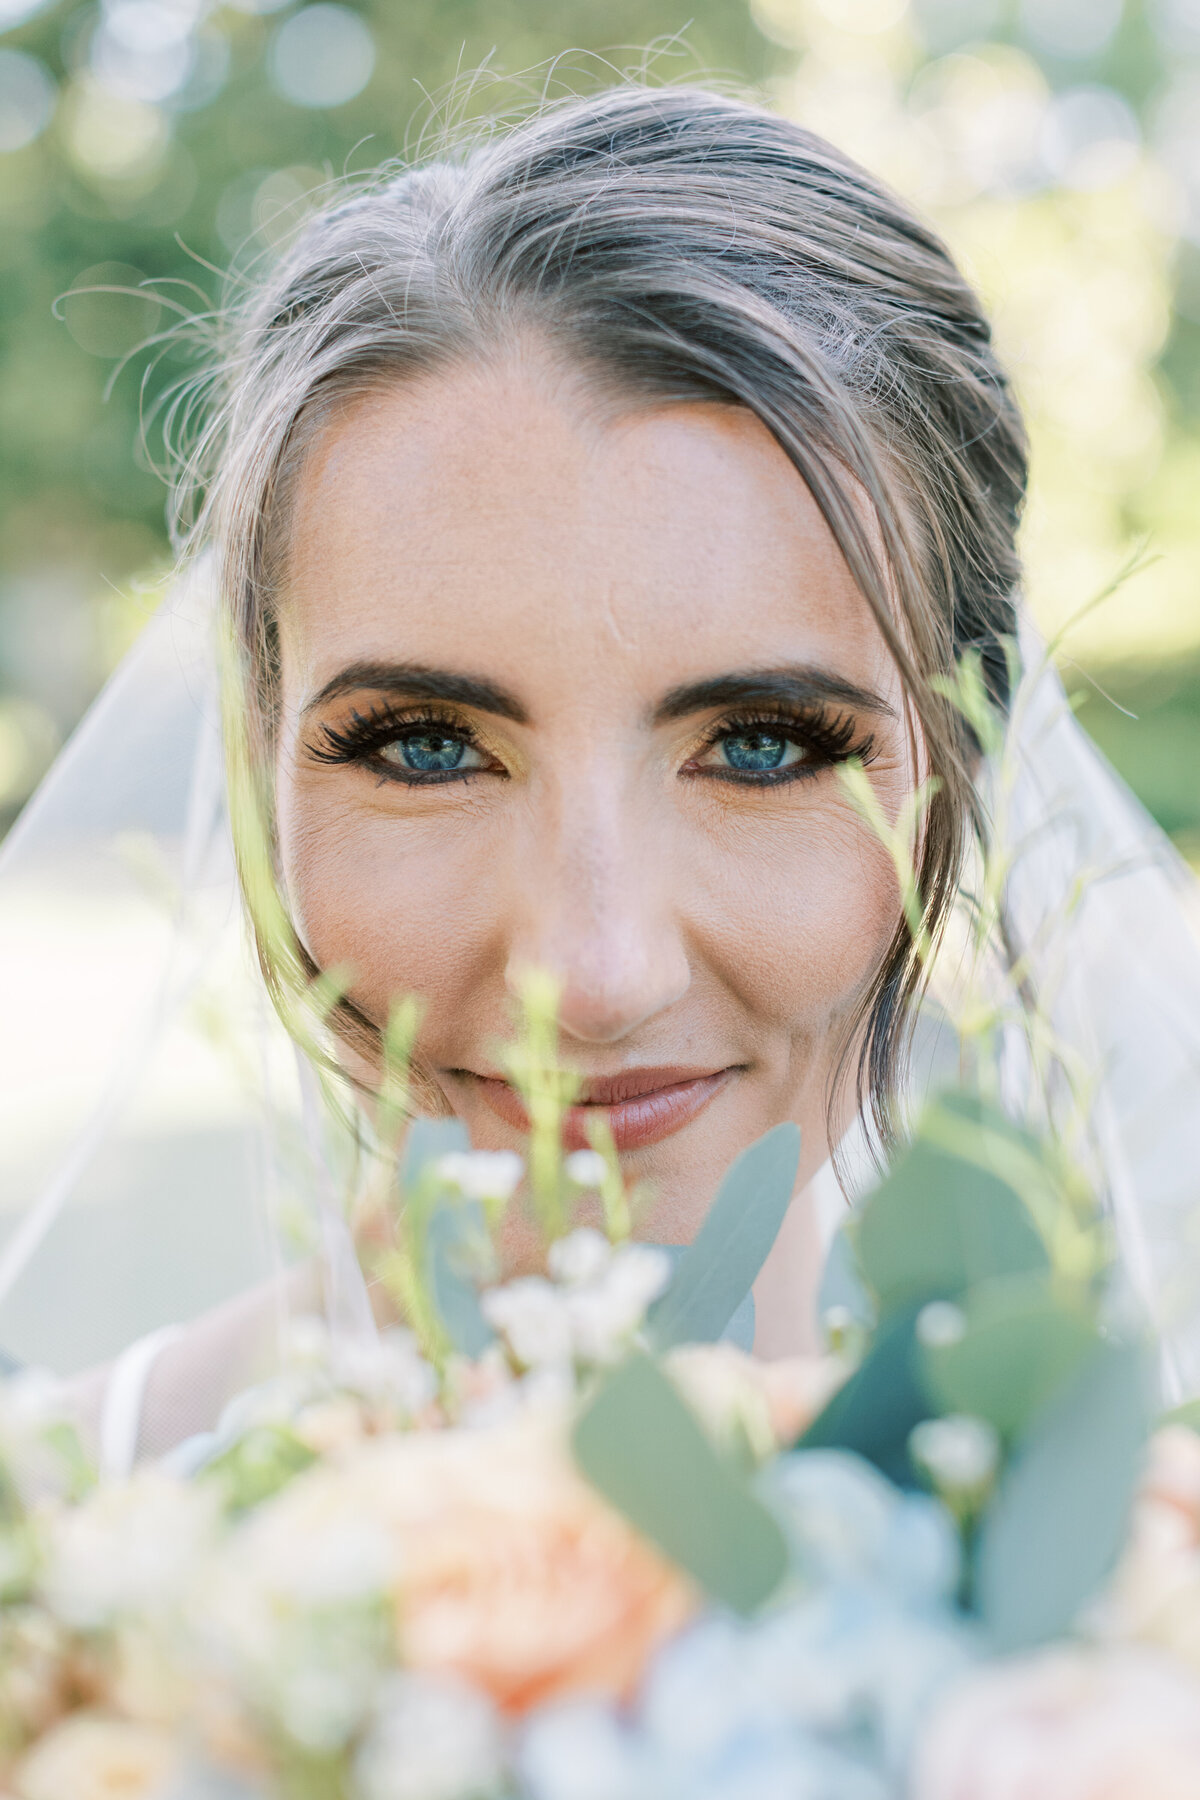 A bride has beautiful blue eyes.